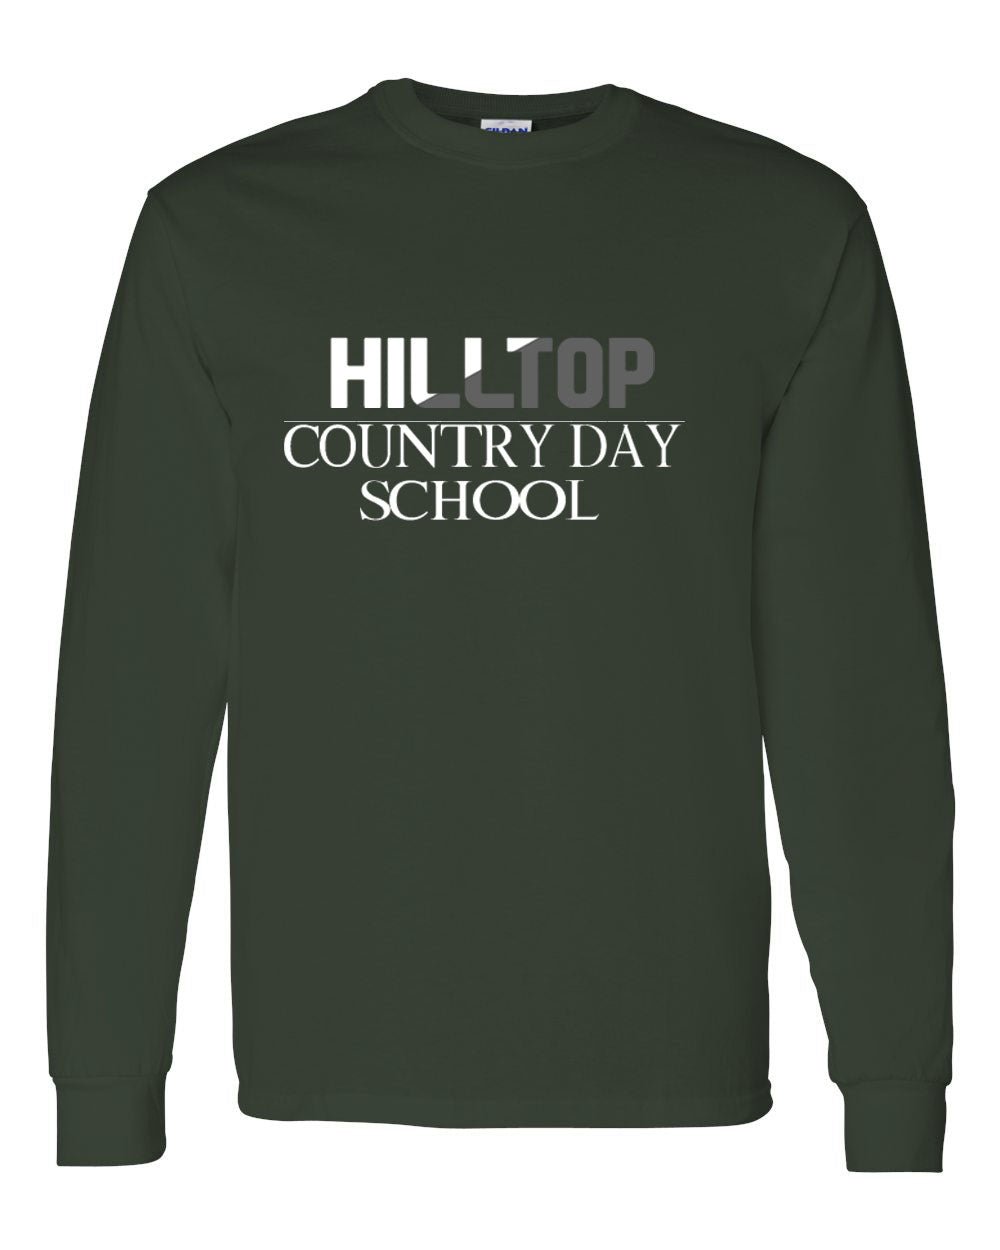 Hilltop Country Day School design 4 Long Sleeve Shirt